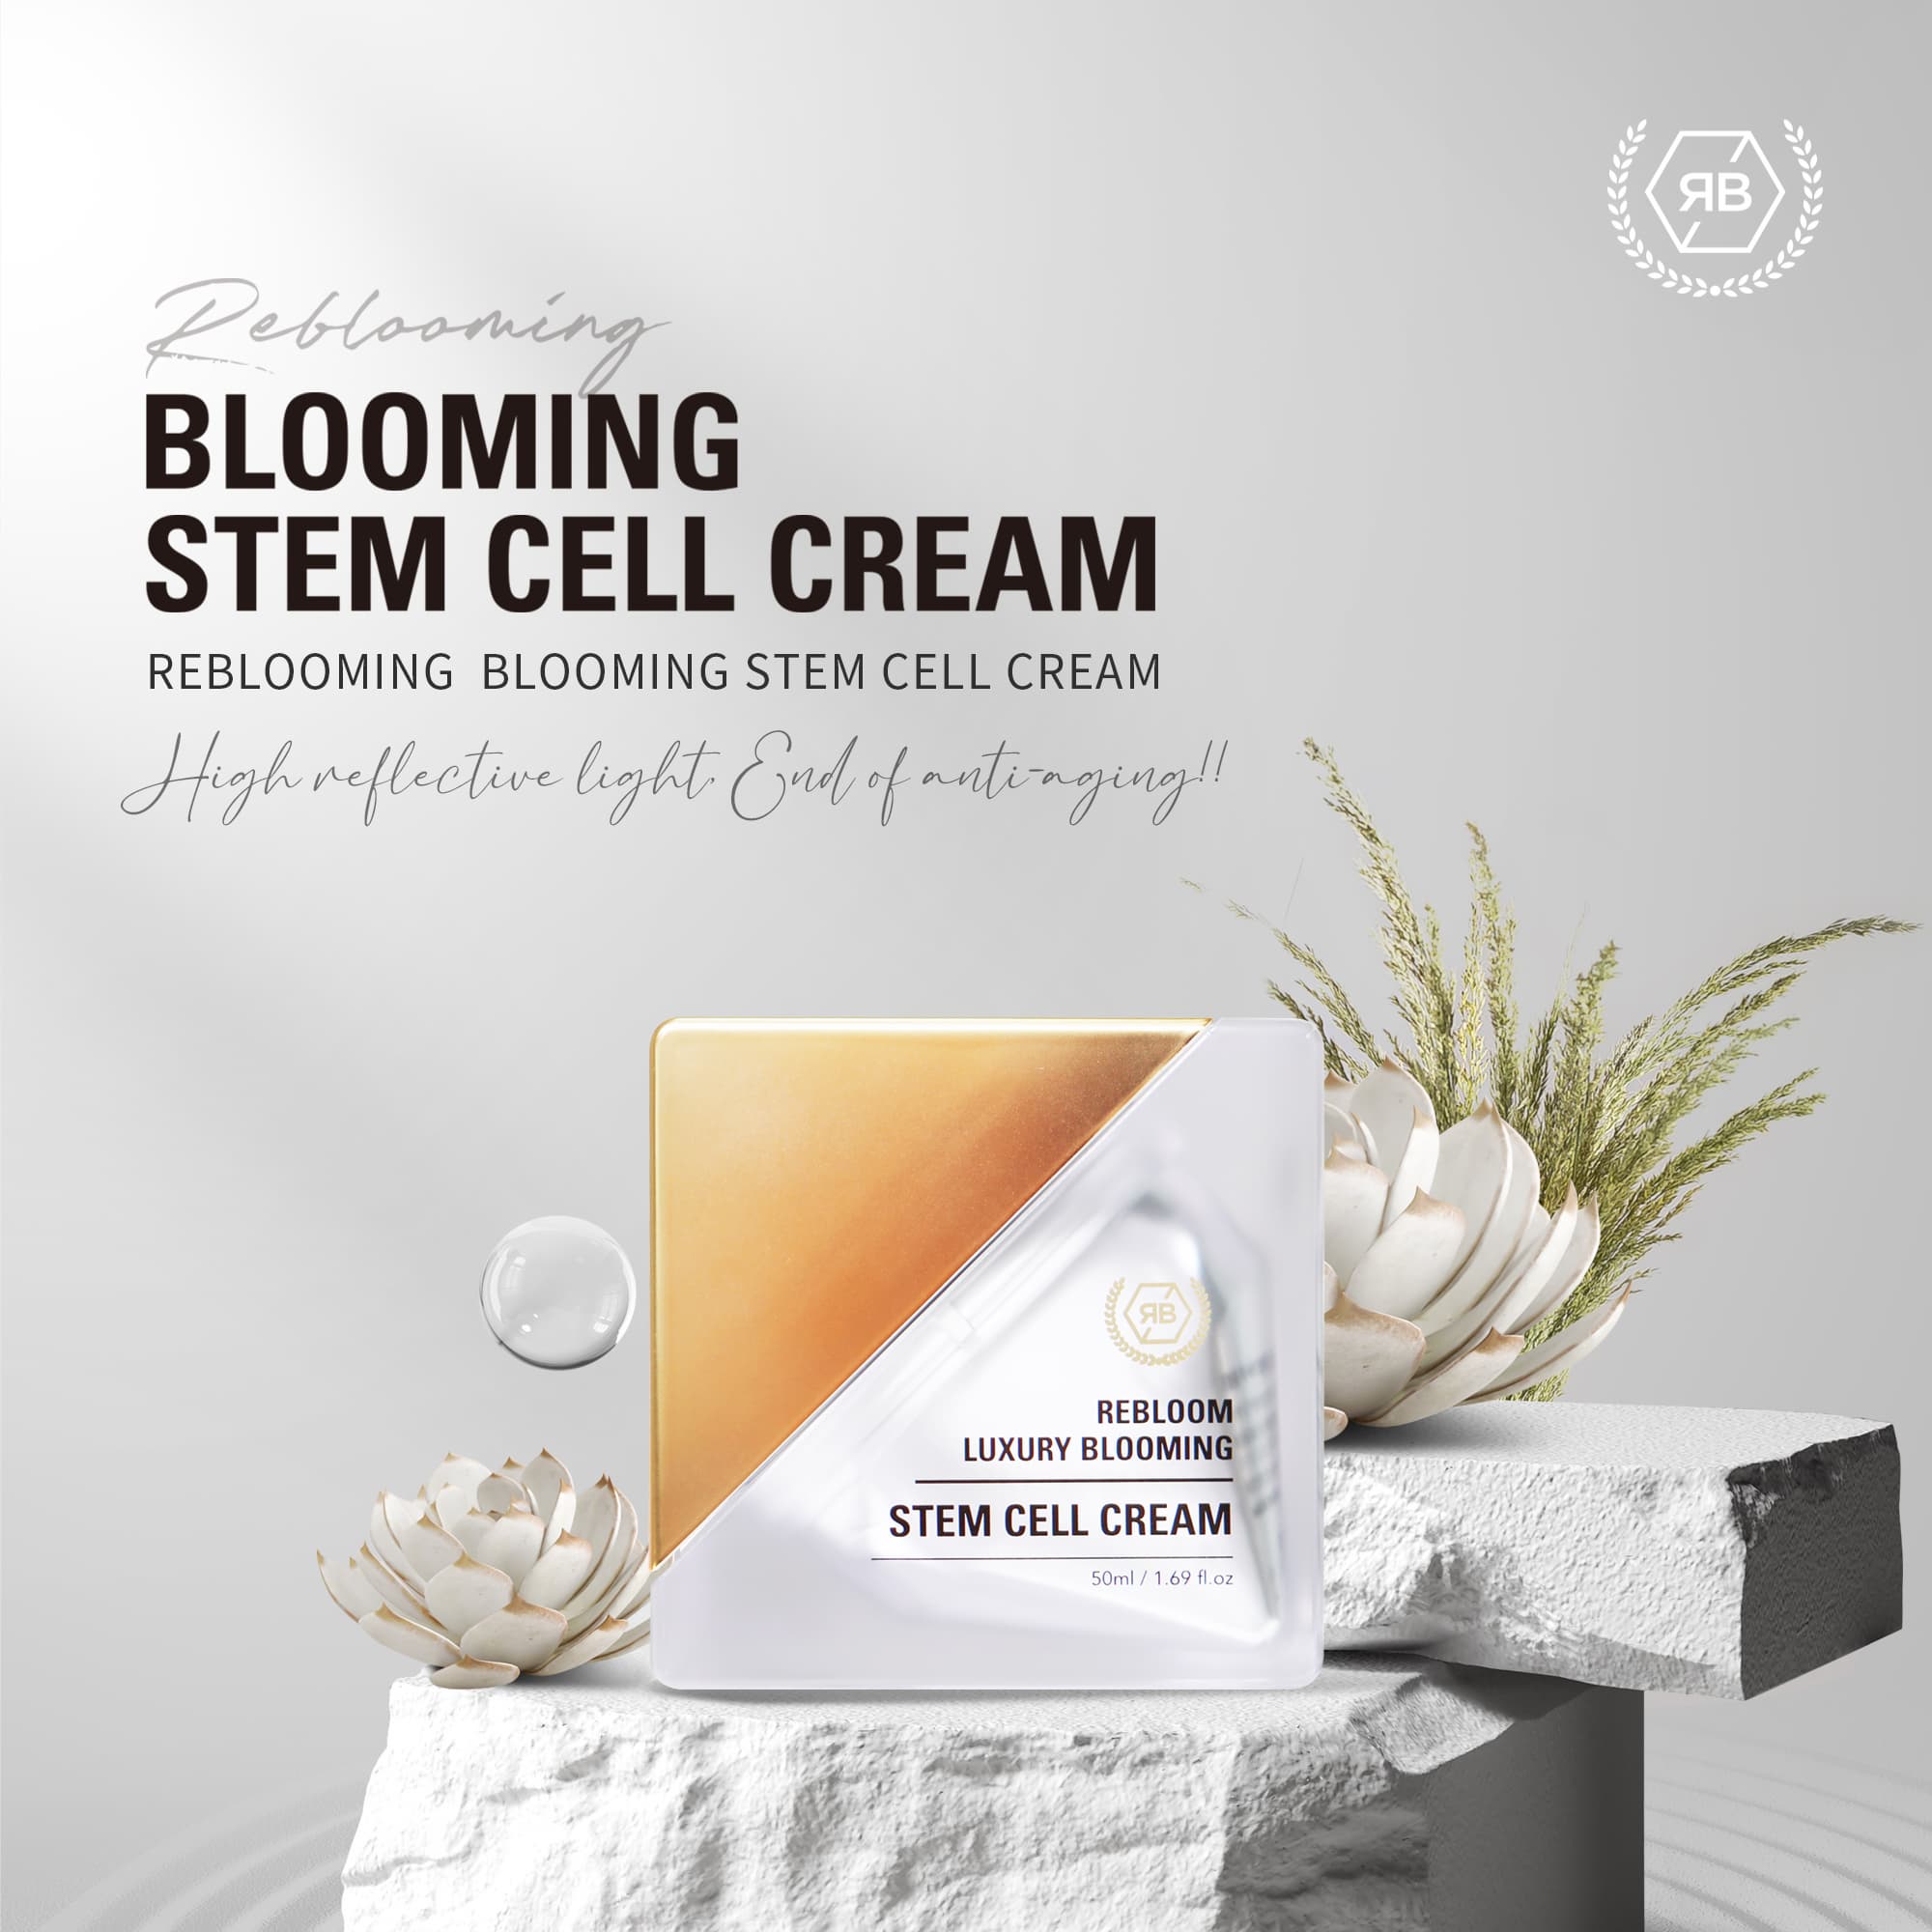 LUXURY BLOOMING STEM CELL CREAM